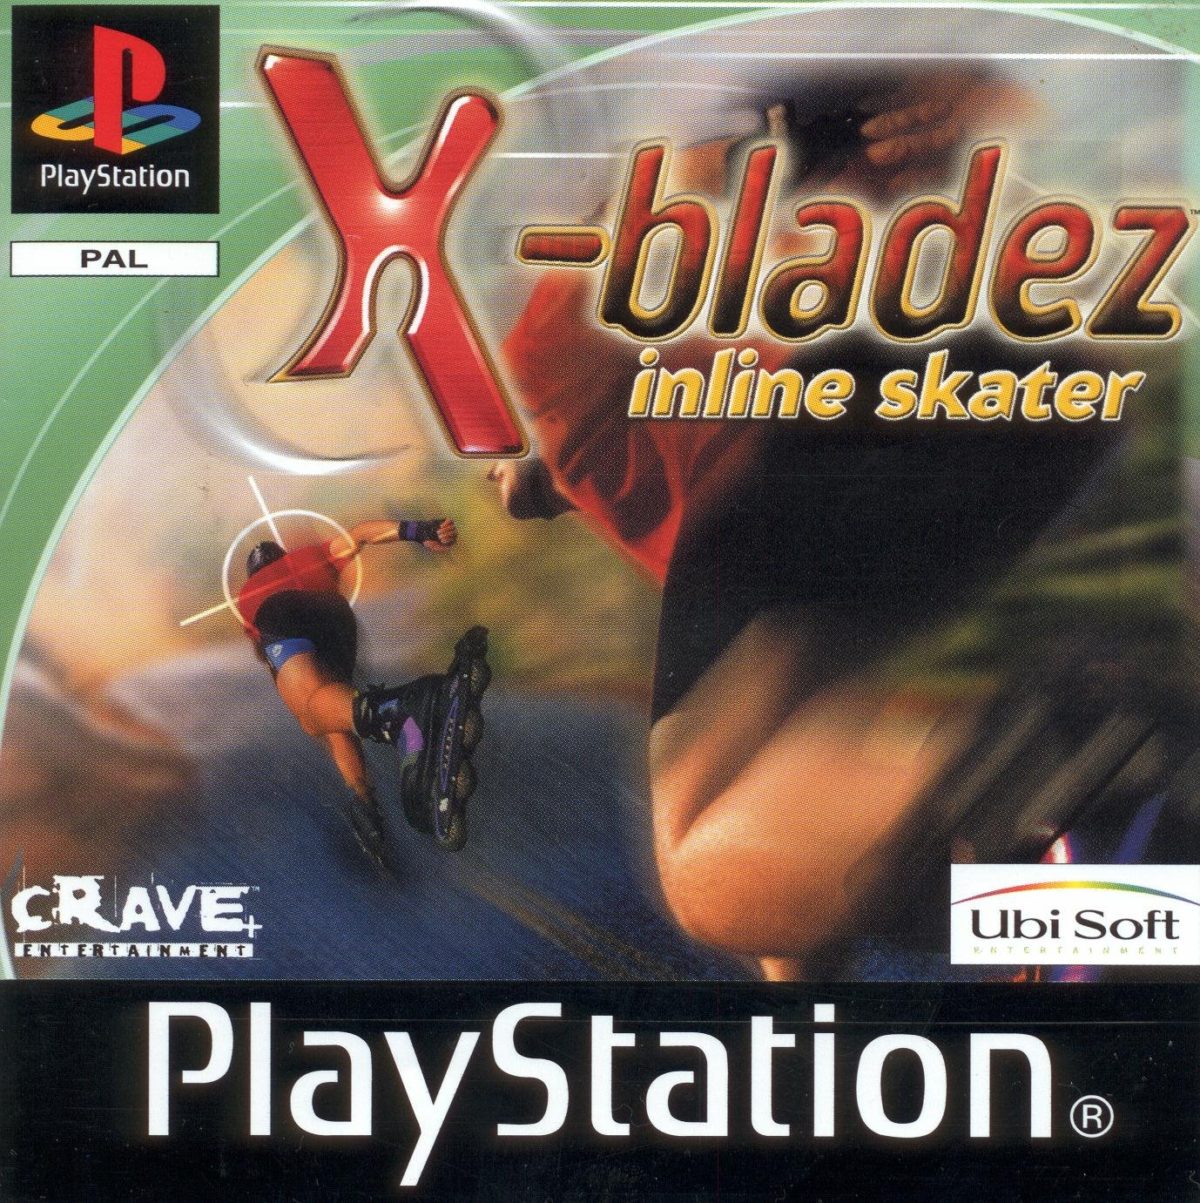 X-Bladez: Inline Skater player count stats